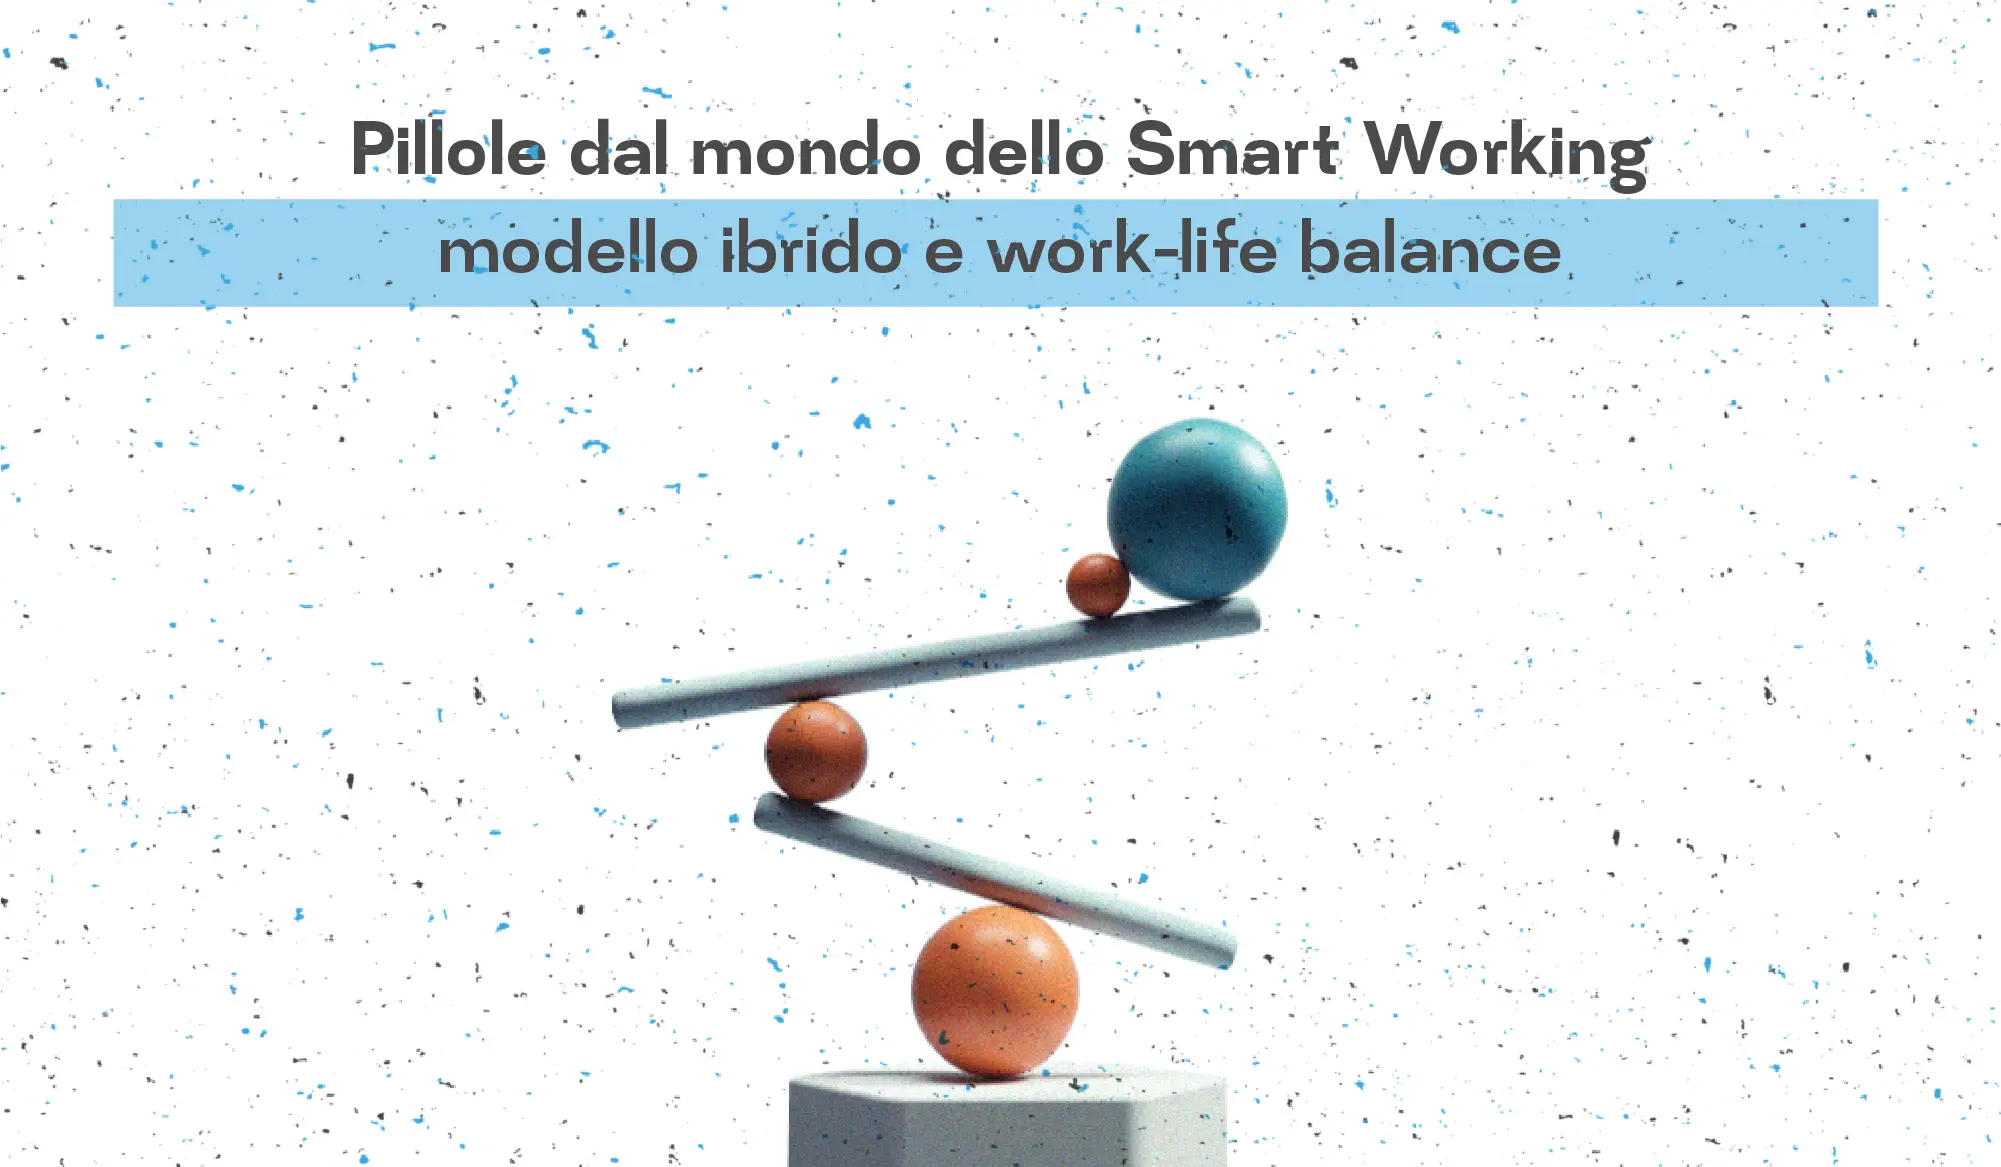 Smart working: modello ibrido e work-life balance